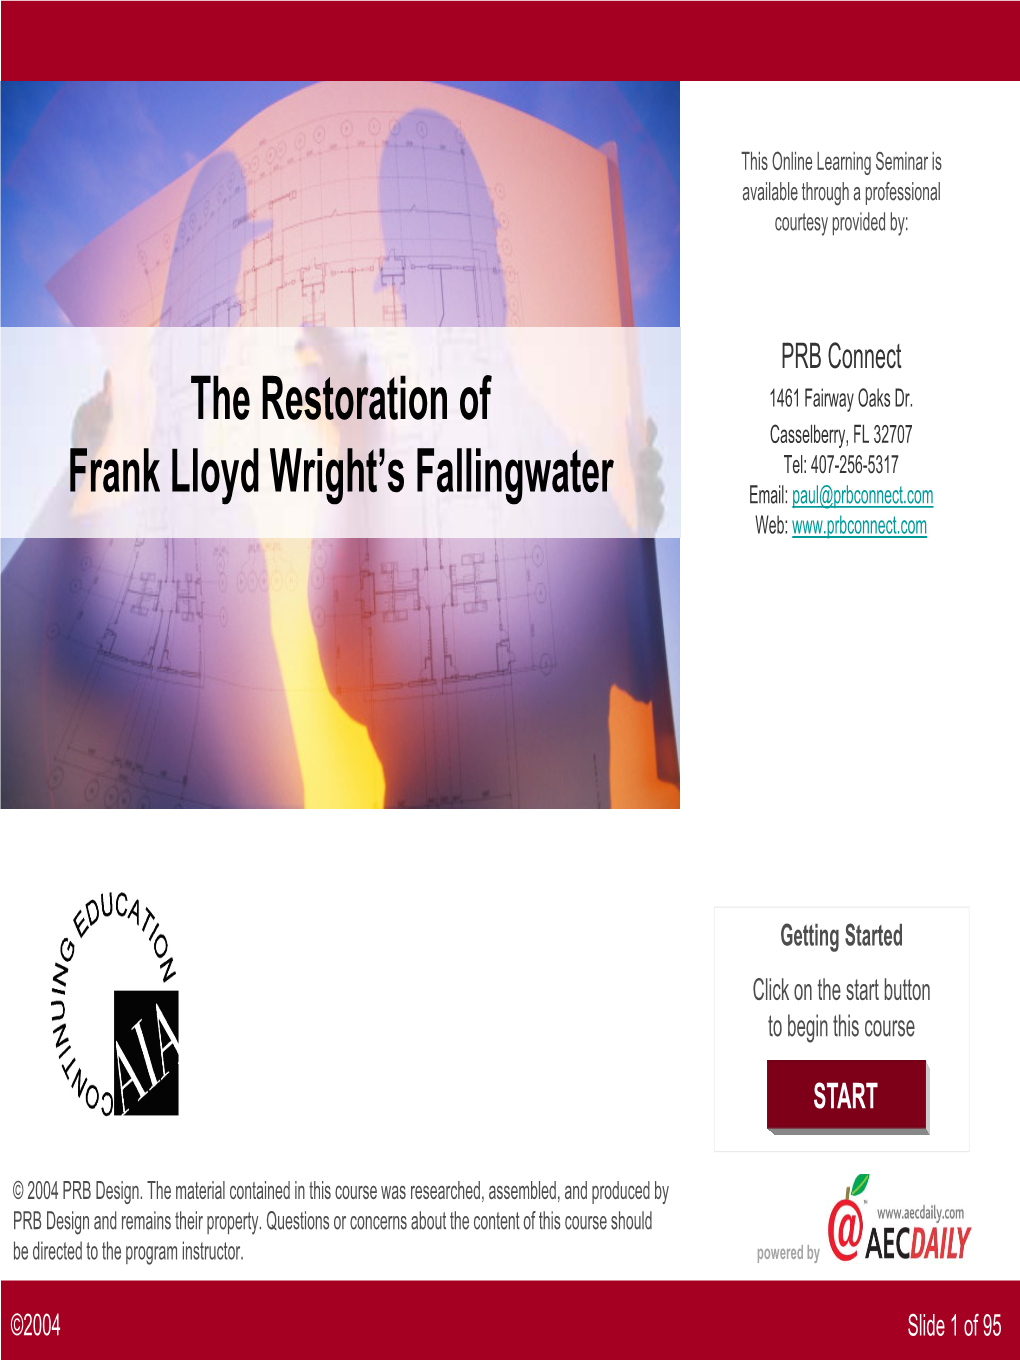 The Restoration of Frank Lloyd Wright's Fallingwater